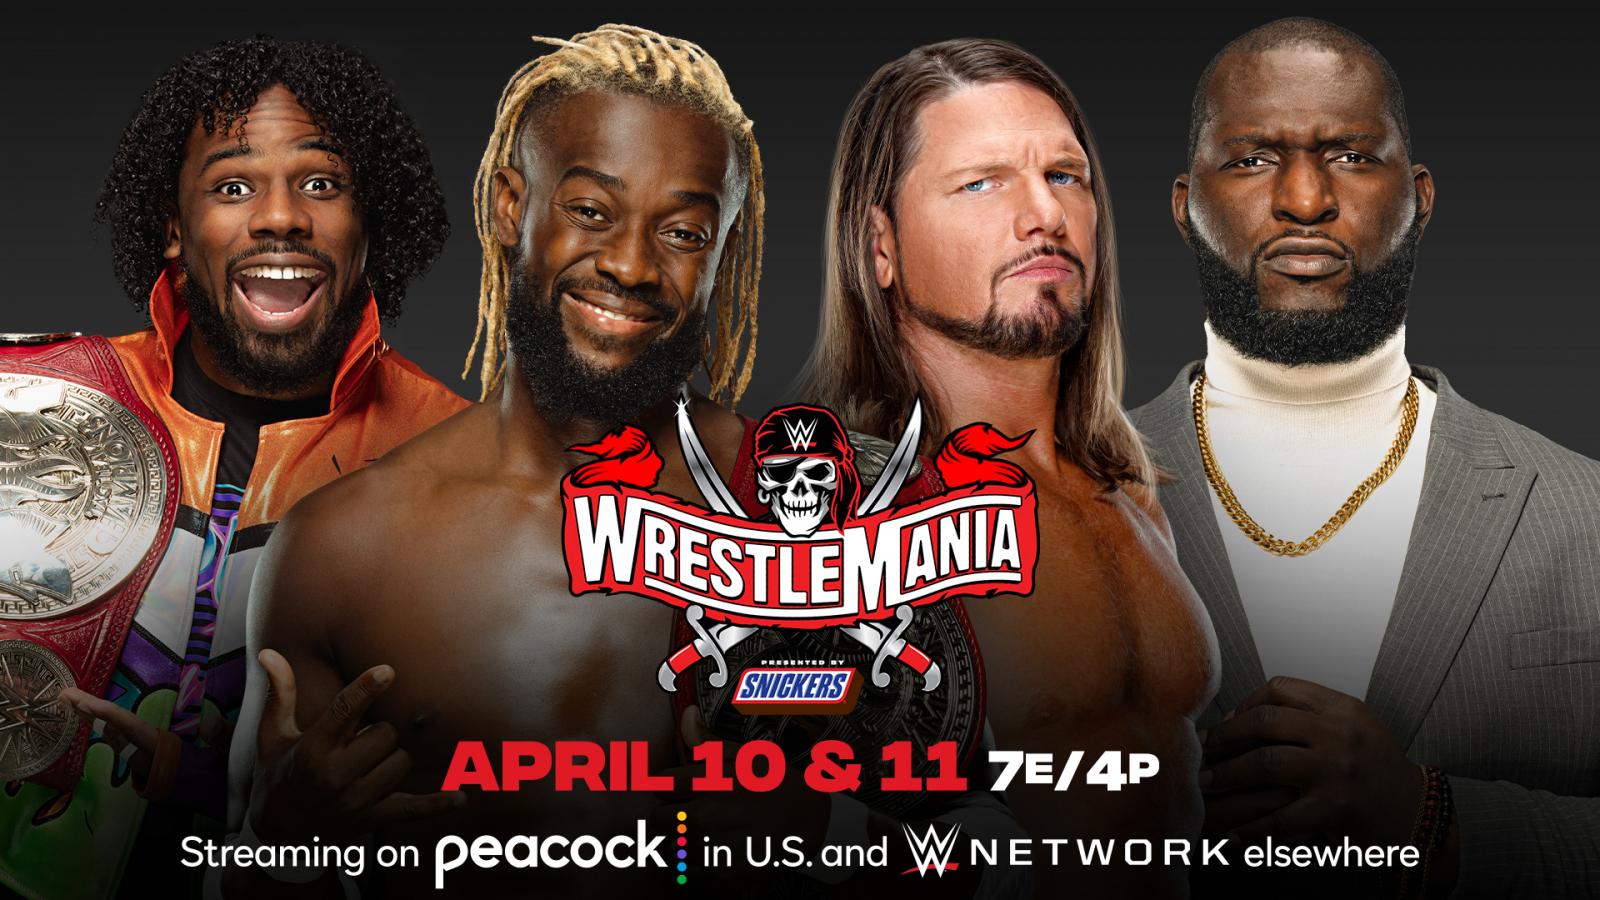 AJ Styles & Omos vs. Kingston & Woods official for WrestleMania